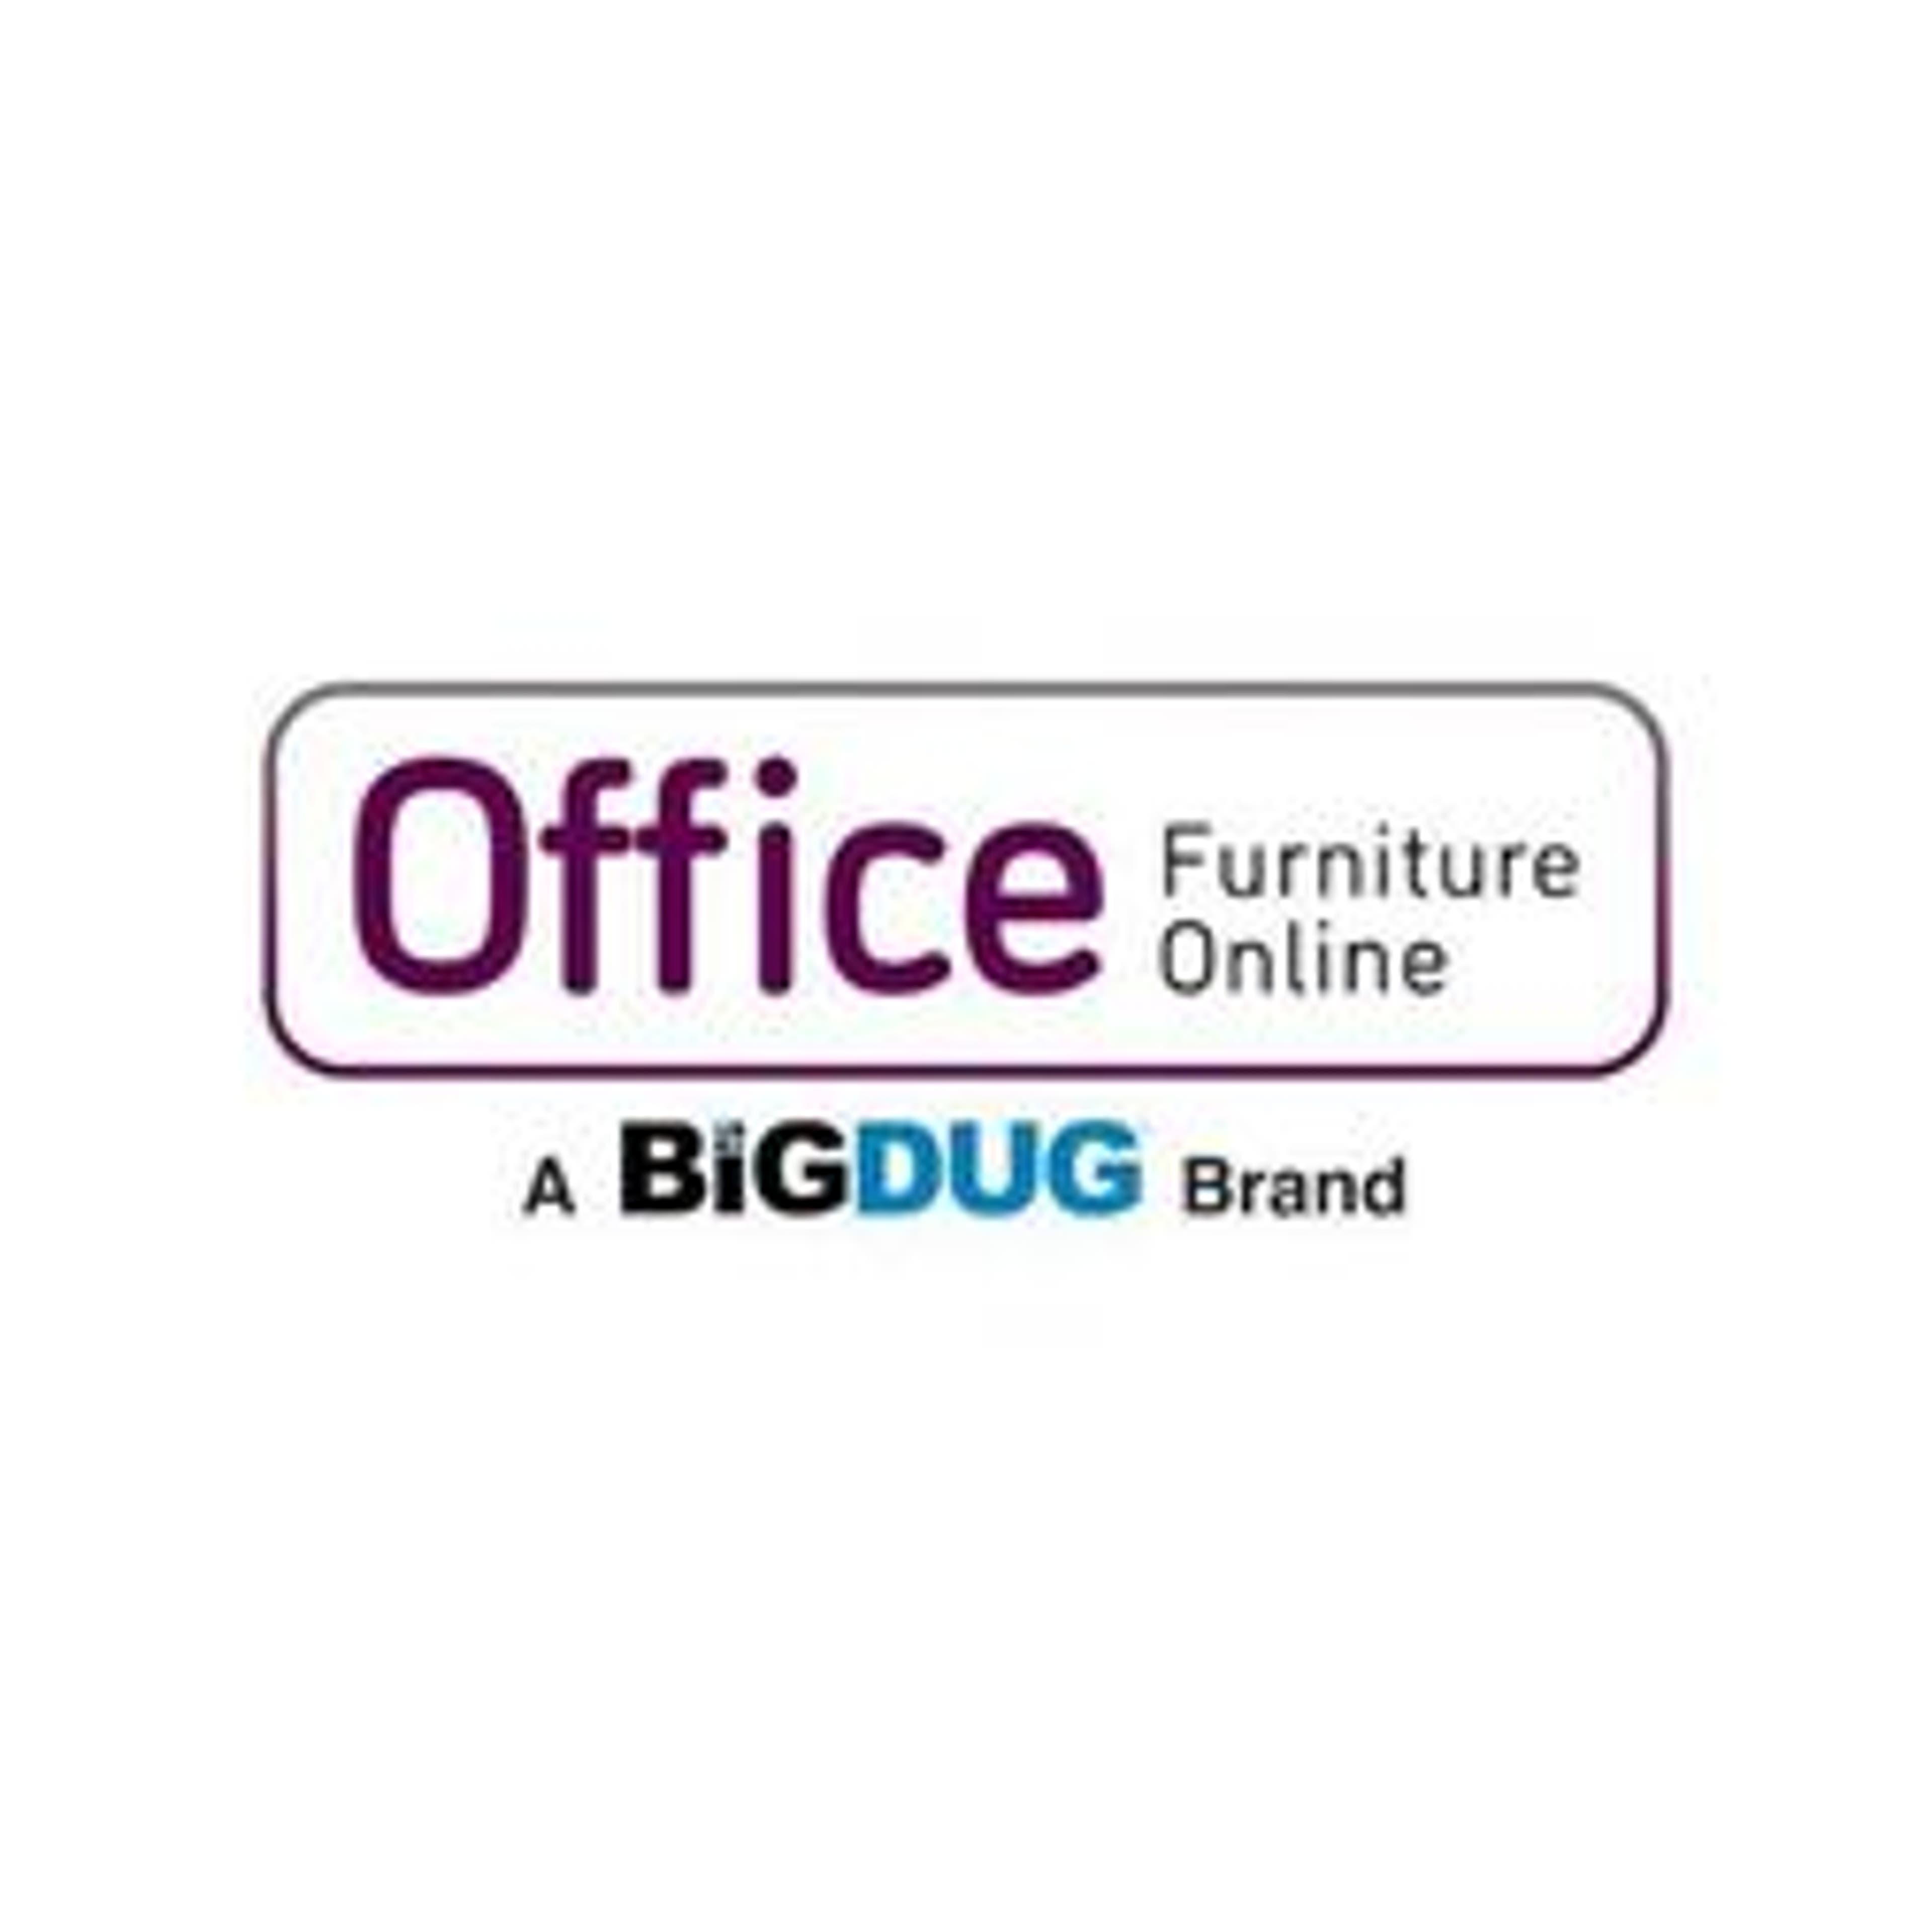  Office Furniture Online 